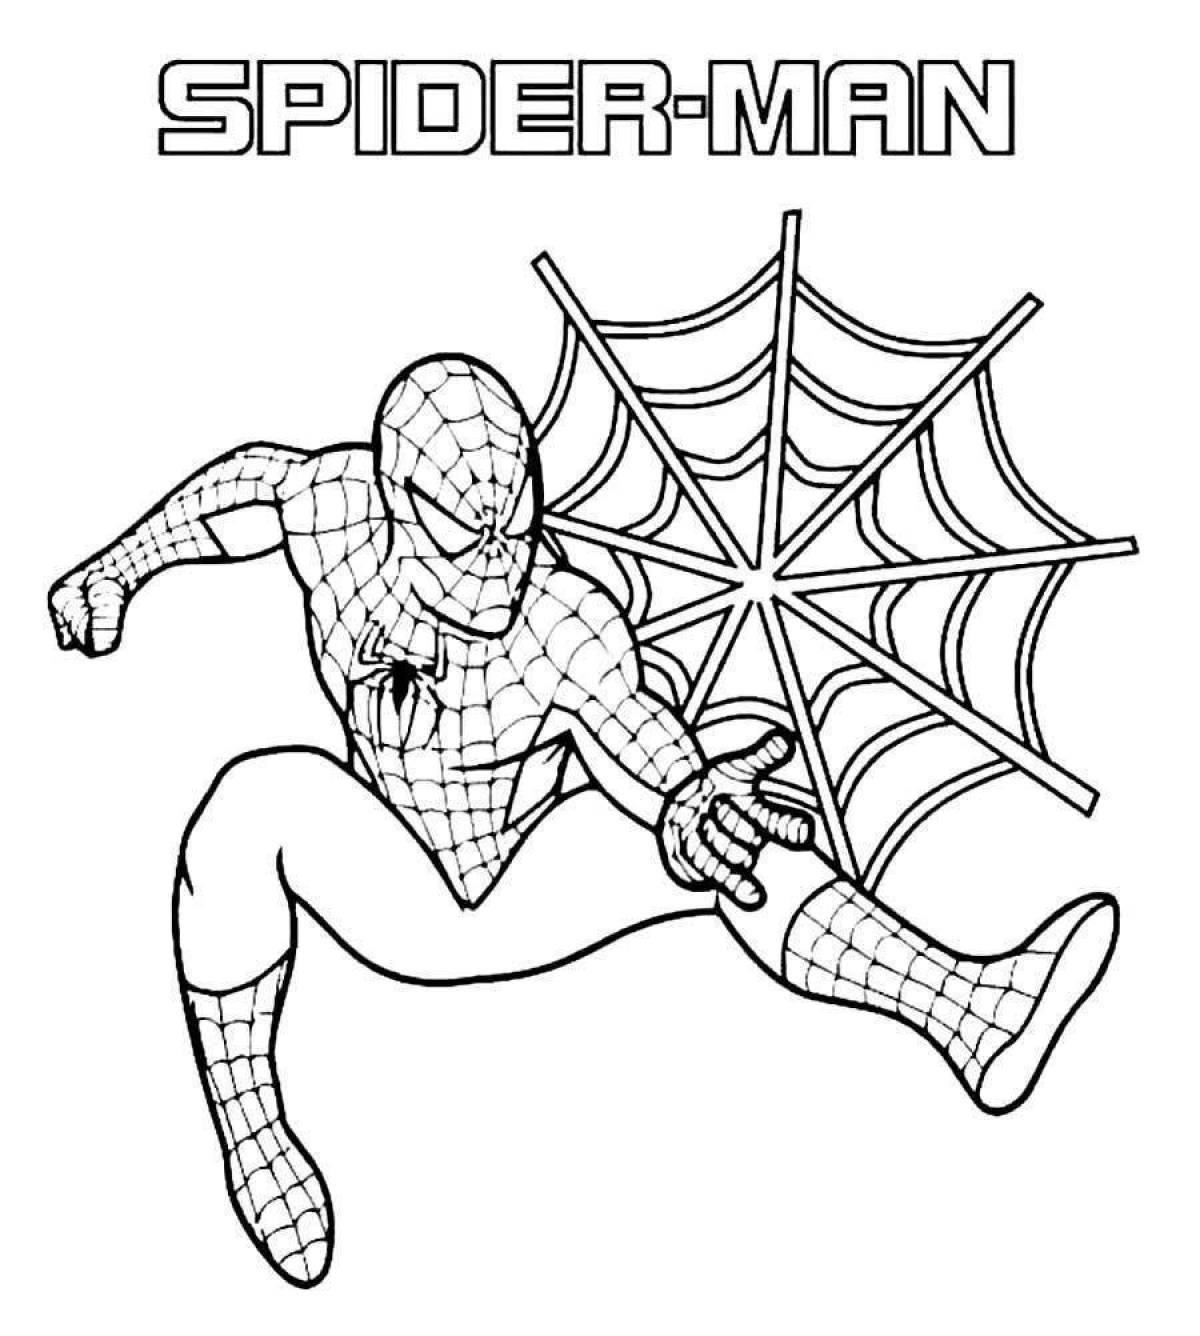 Spiderman's impressive coloring page